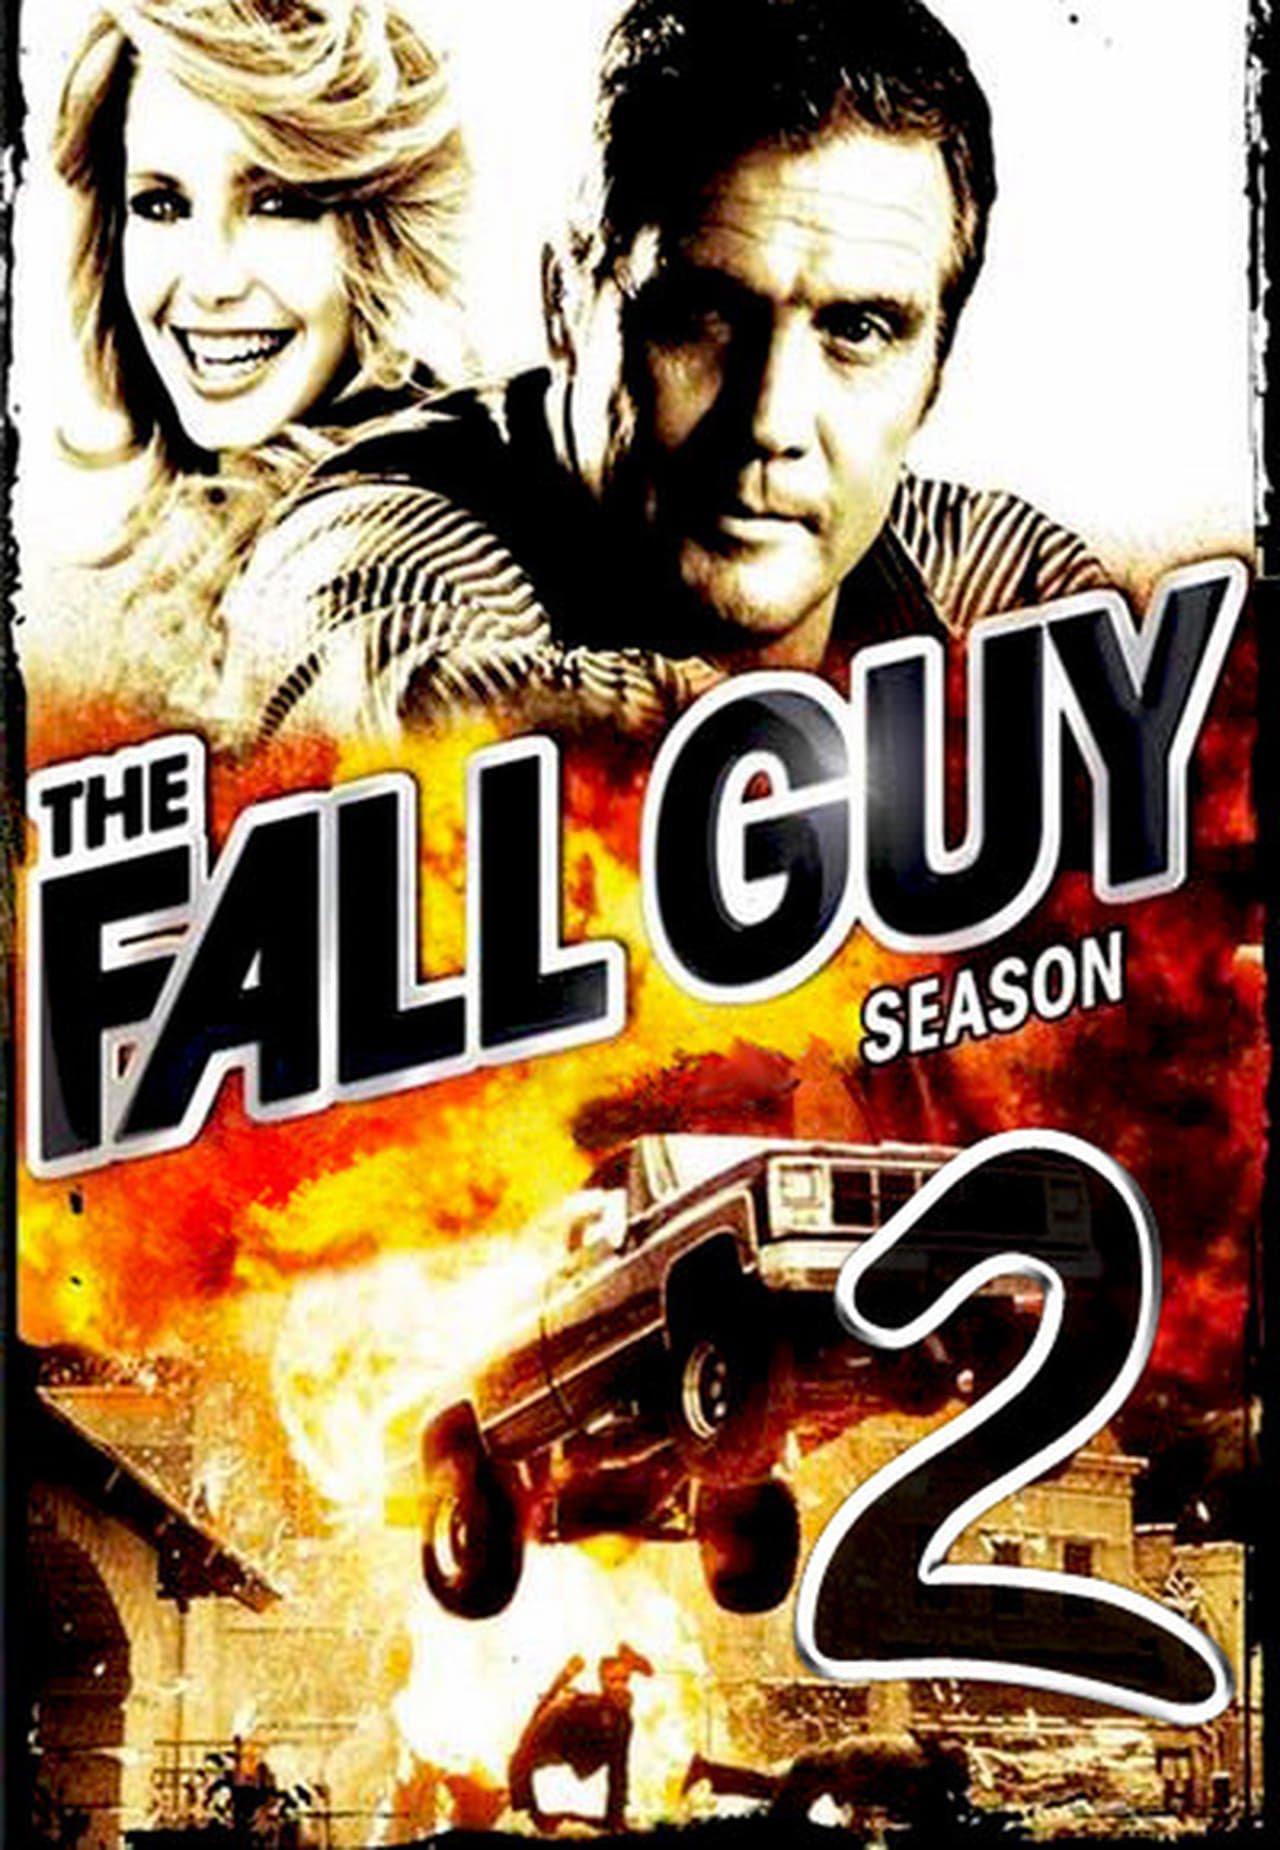 The Fall Guy Season 2